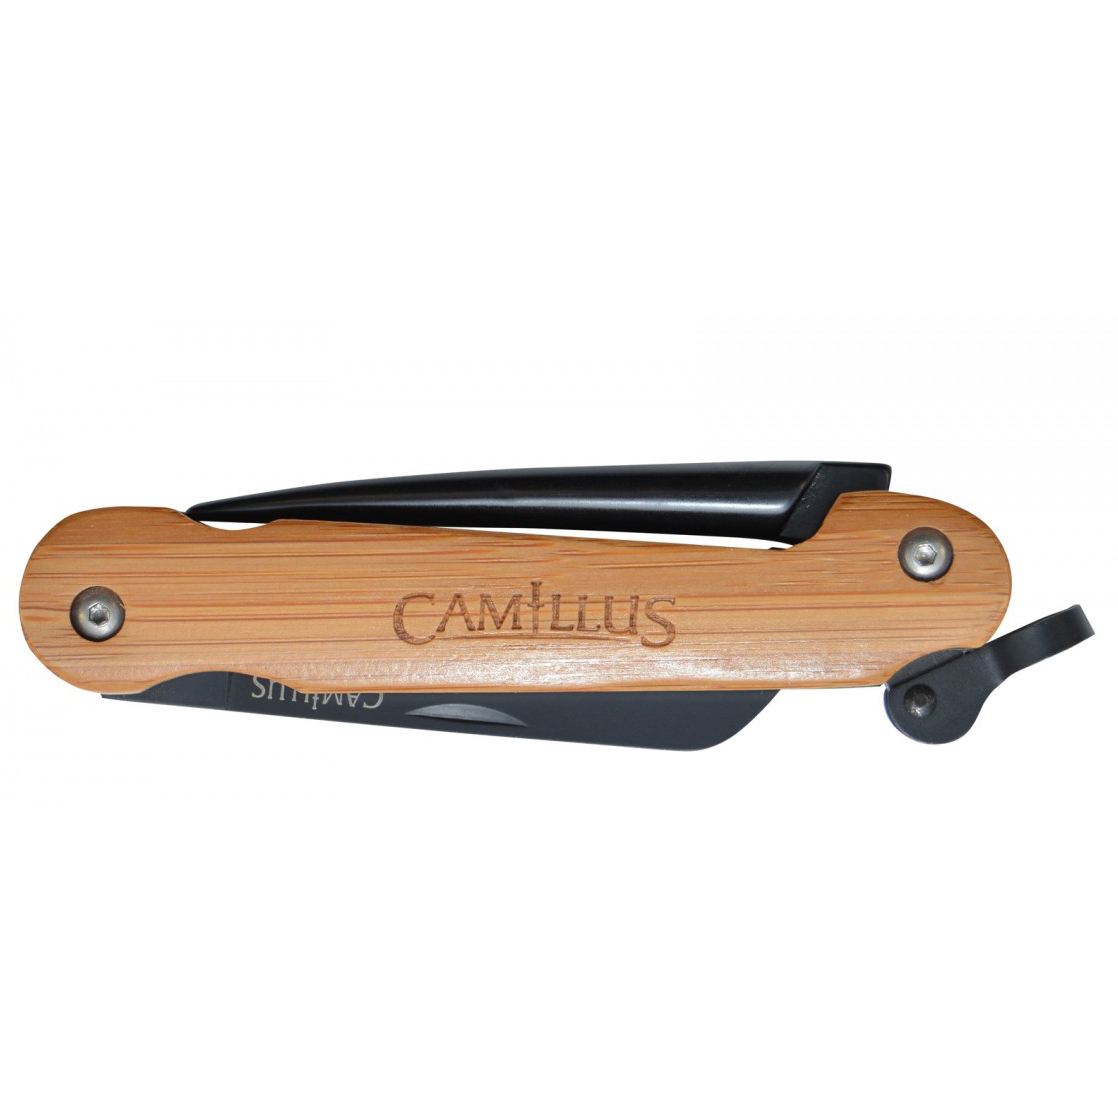 Нож складной Camillus Nautical Sailing Knife with Marlin Spike, Carbonitride Titanium® Aus-8 Steel, Bamboo Handles 6.4 см. - фото 7